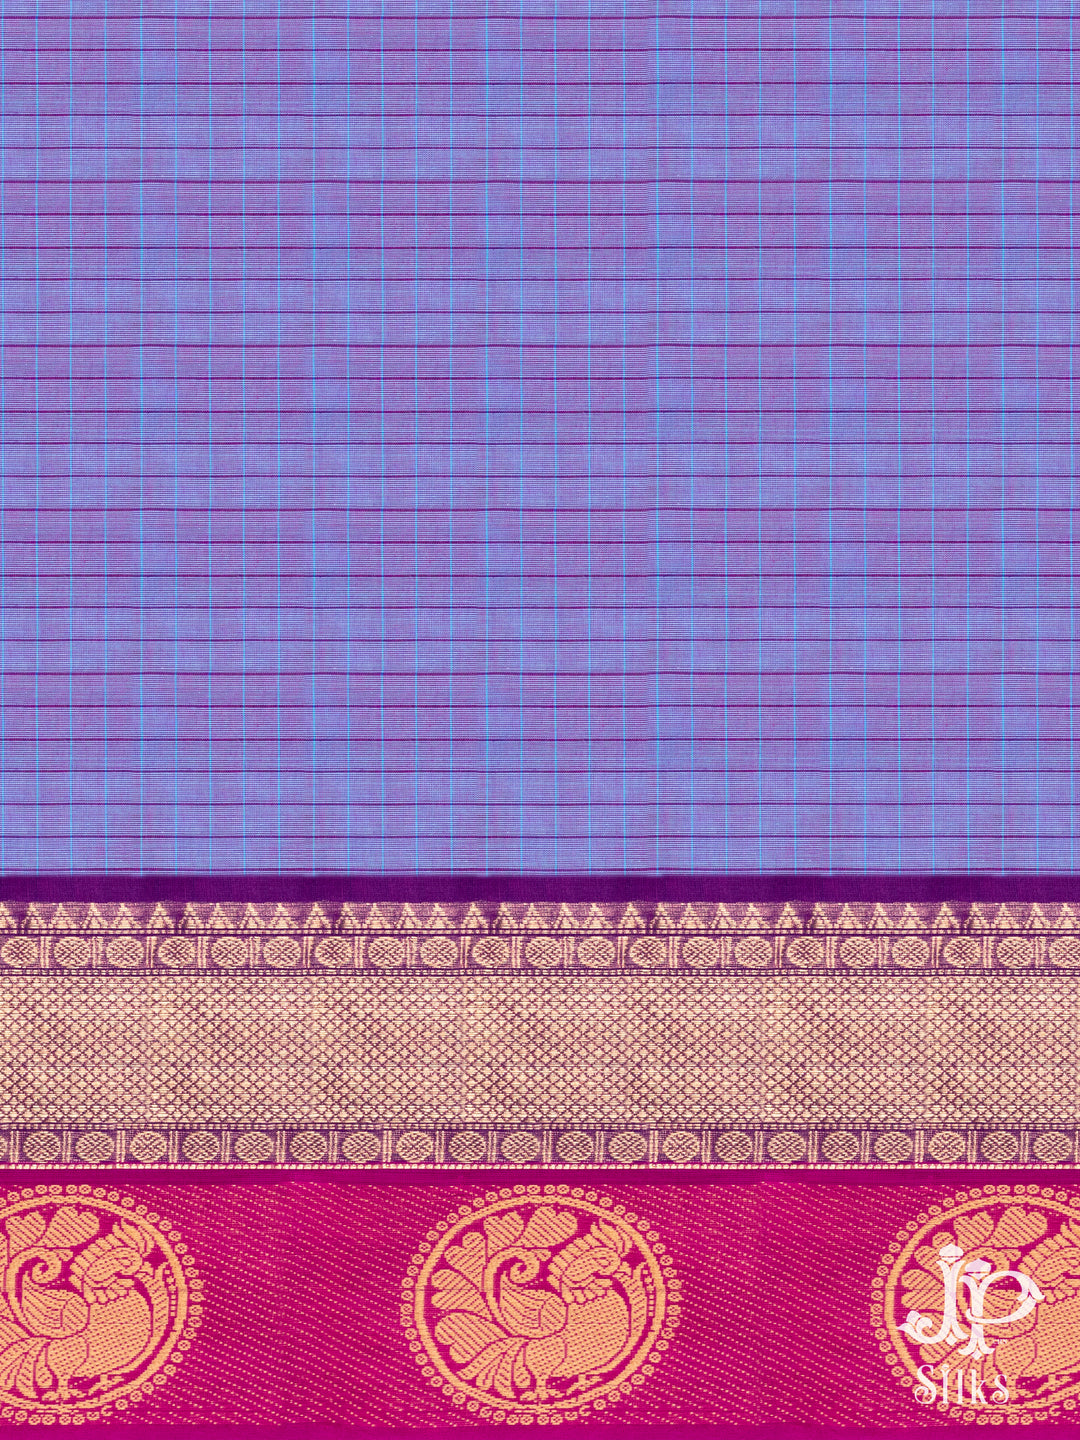 Neon Blue, Magenta Pink Cotton Saree - D9672 - VIew 2